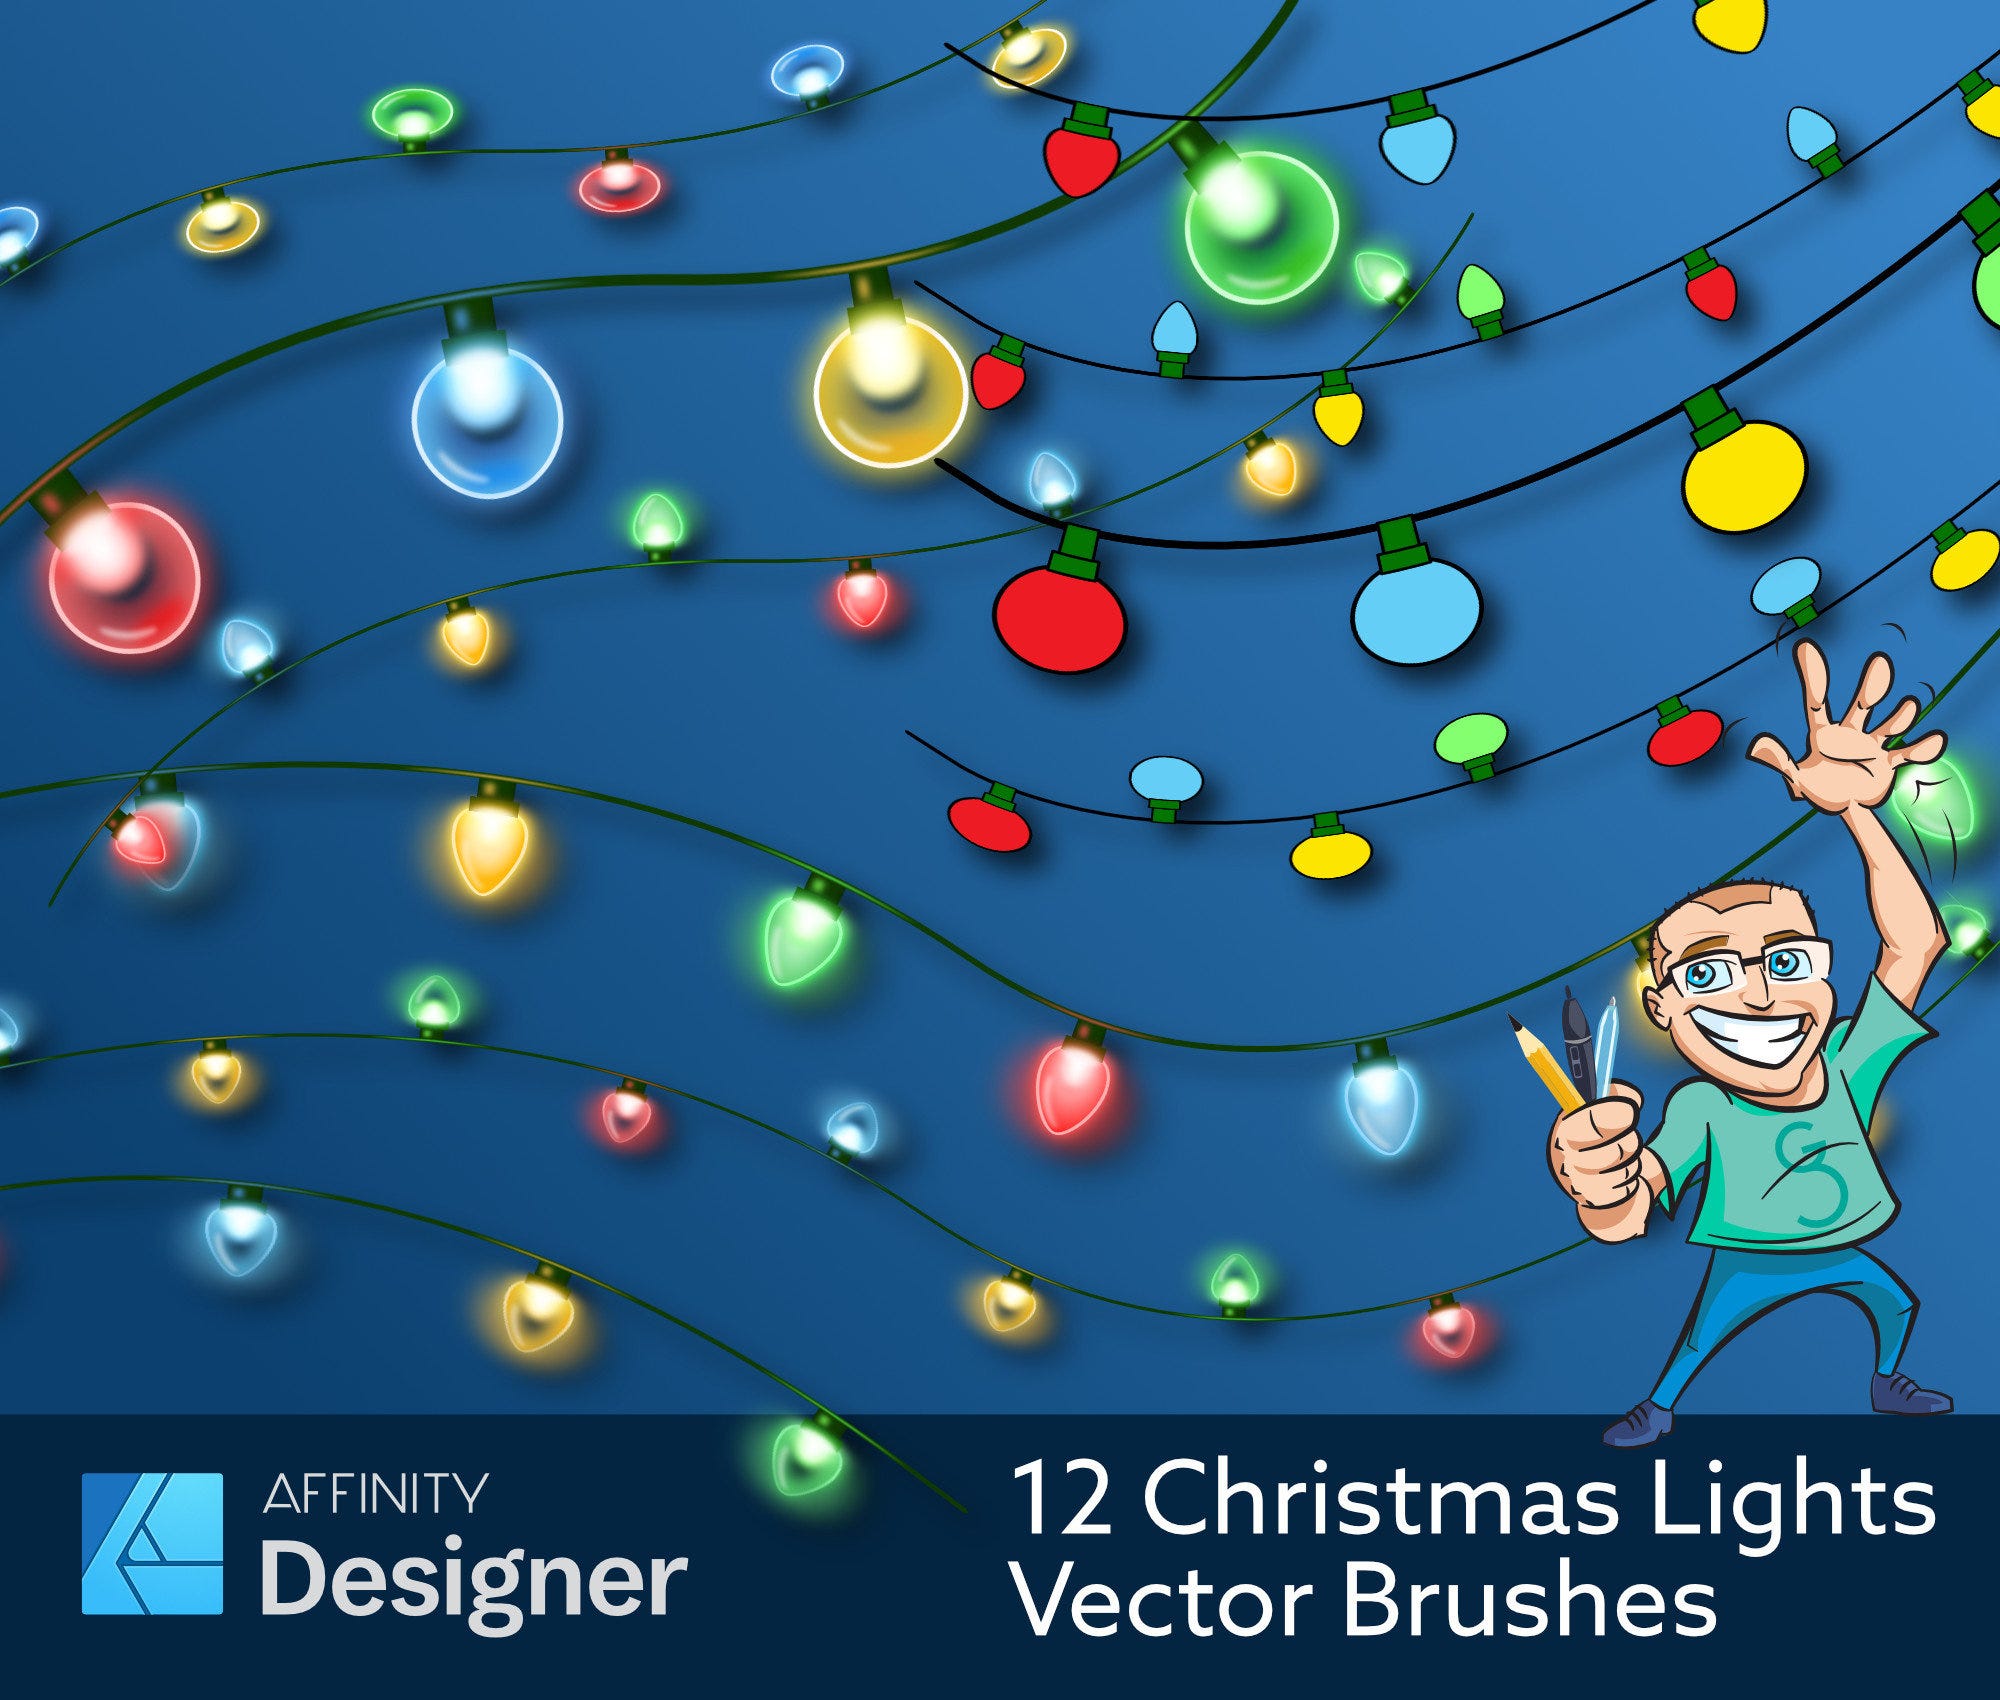 12 Christmas Lights - Vector Brushes for Affinity Designer